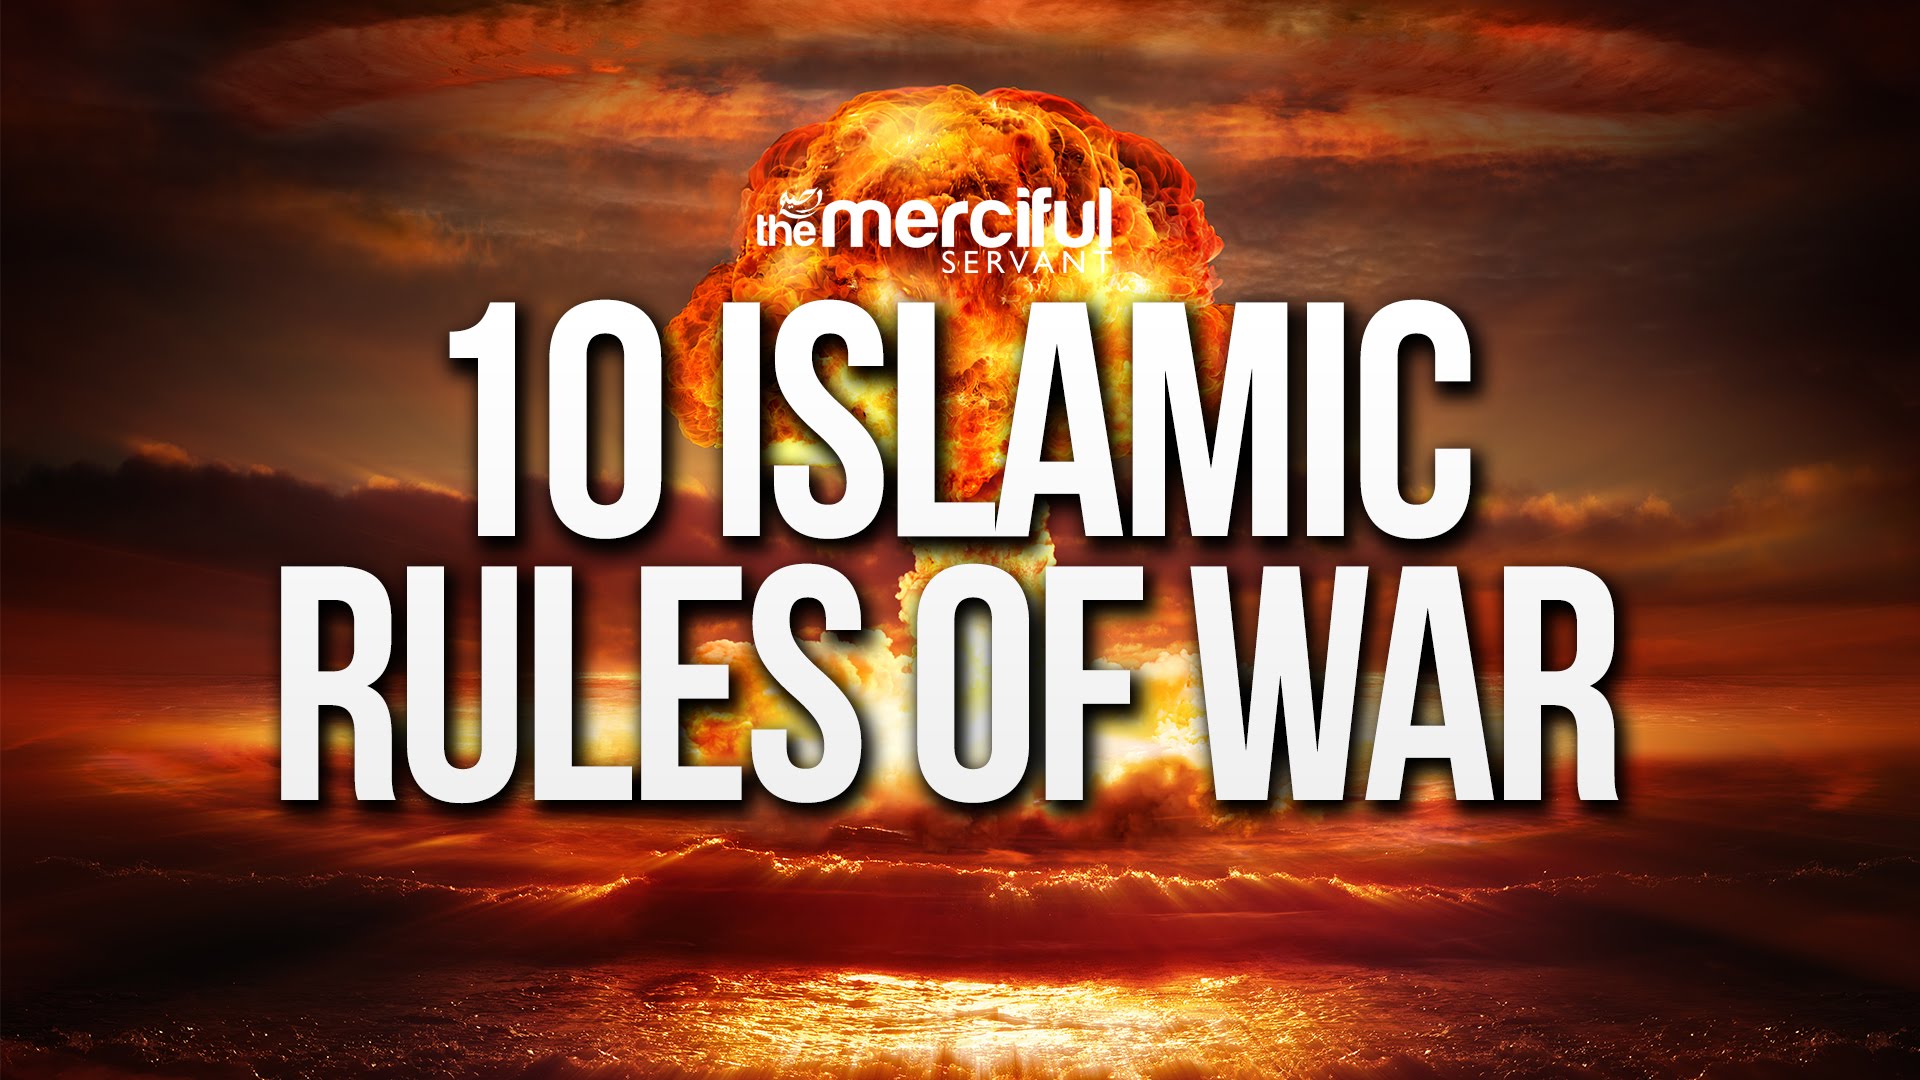 10 Islamic Rules of War